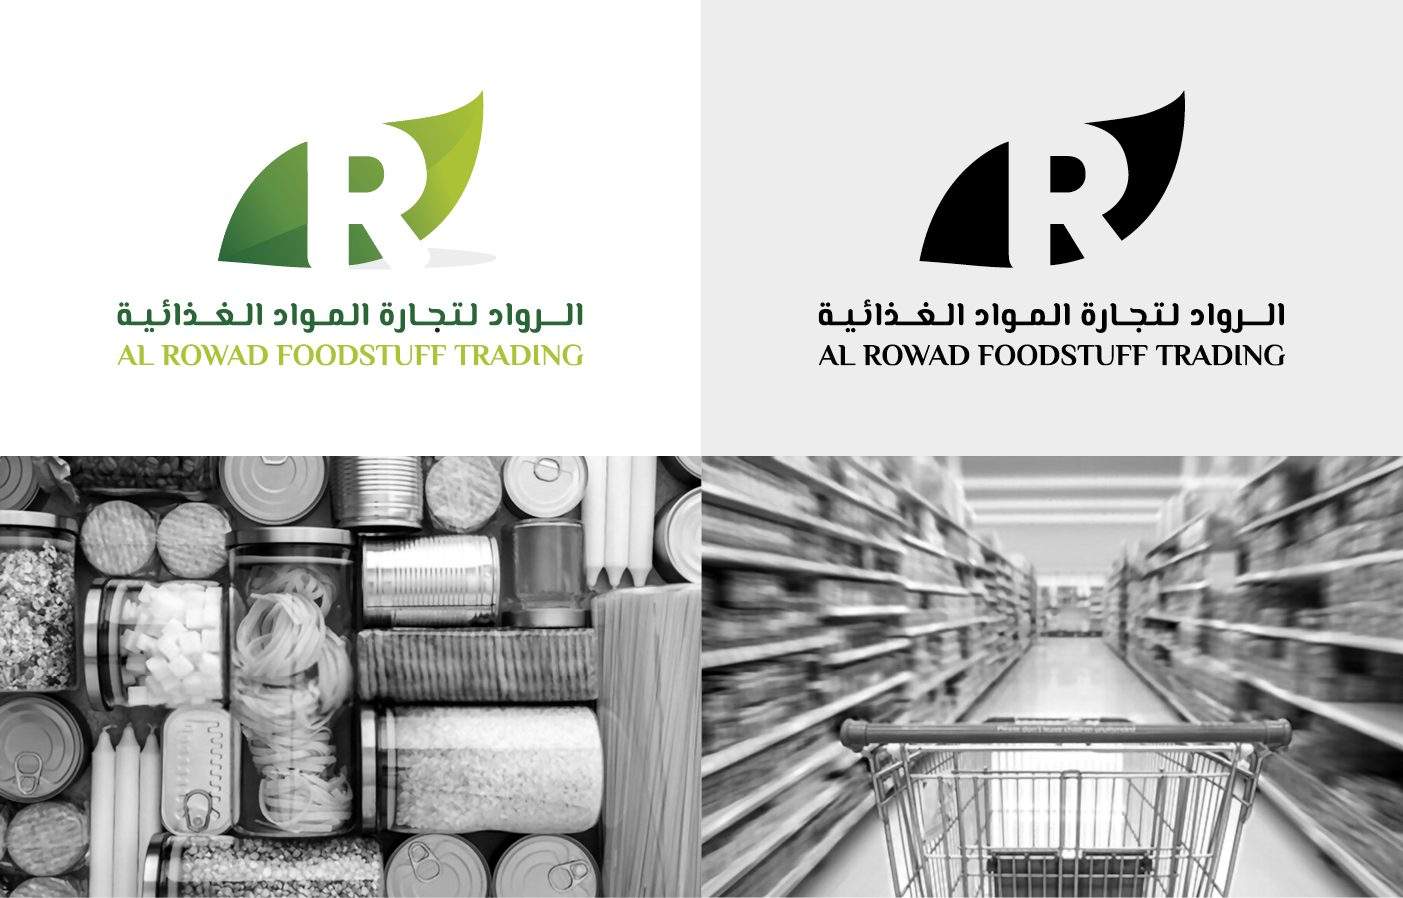 Al Rowad Foodstaff Trading – Brand Identity